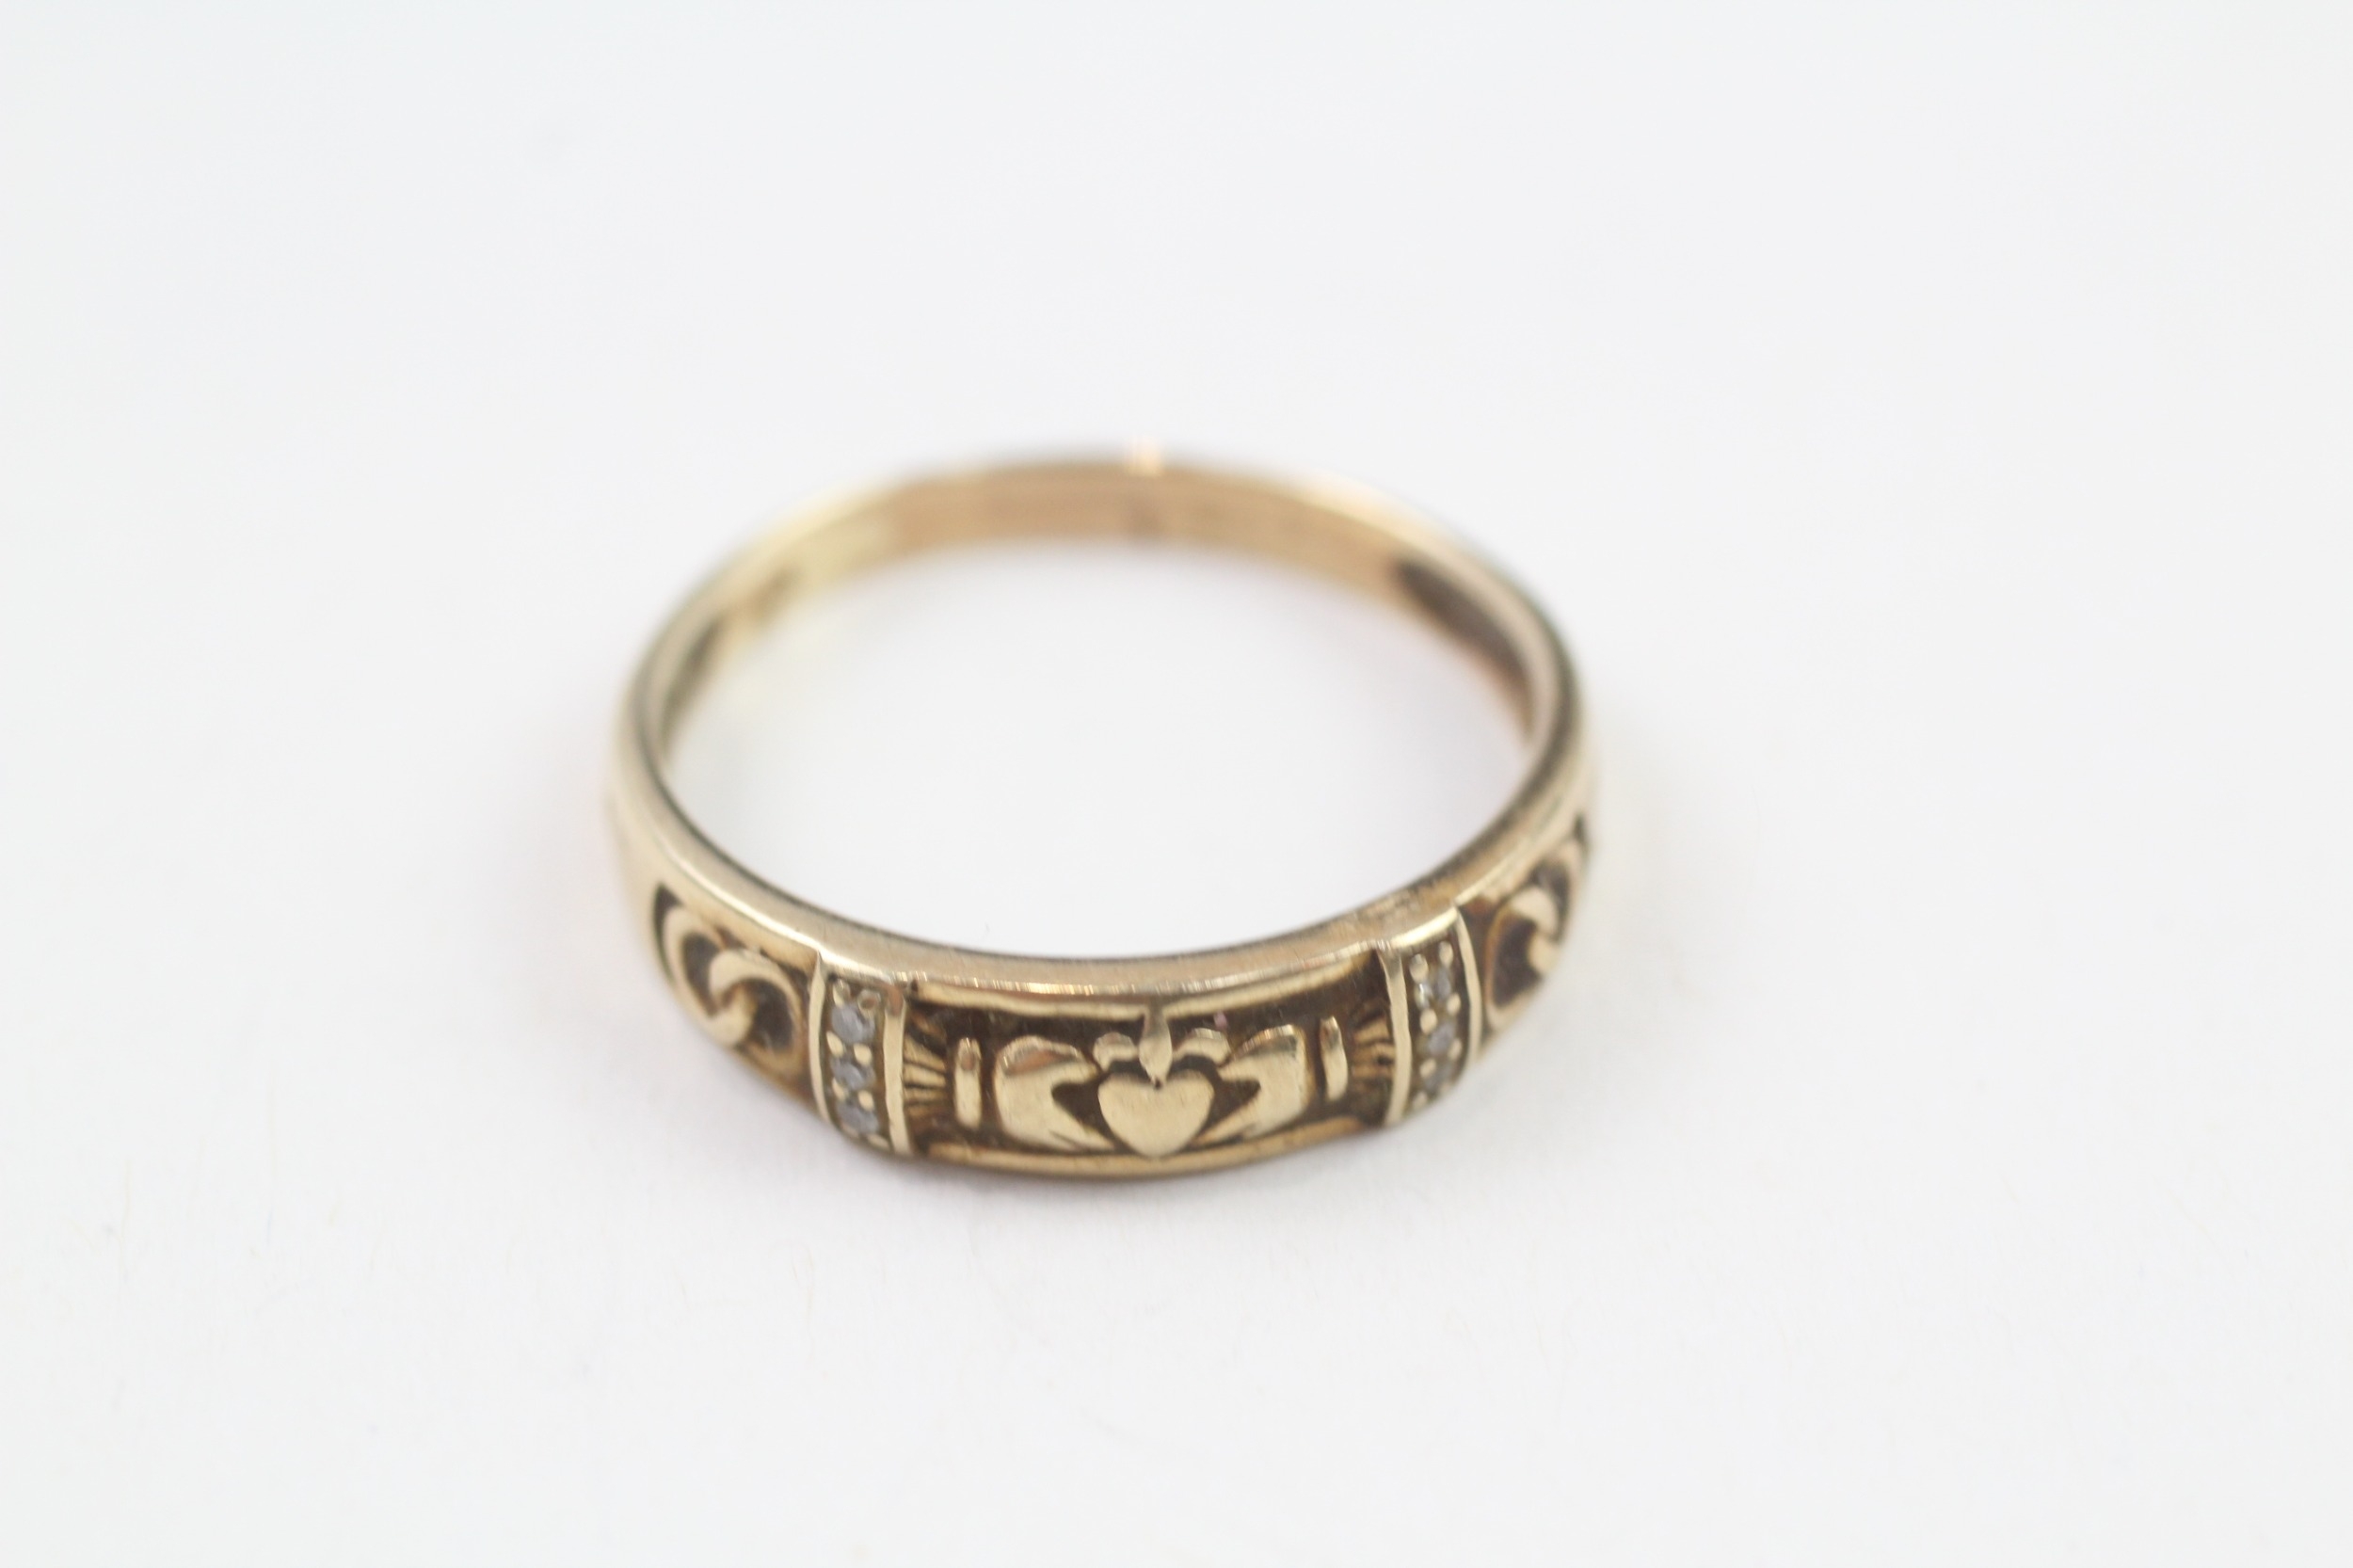 9ct gold diamond Irish claddah ring with a celtic pattern (2g)